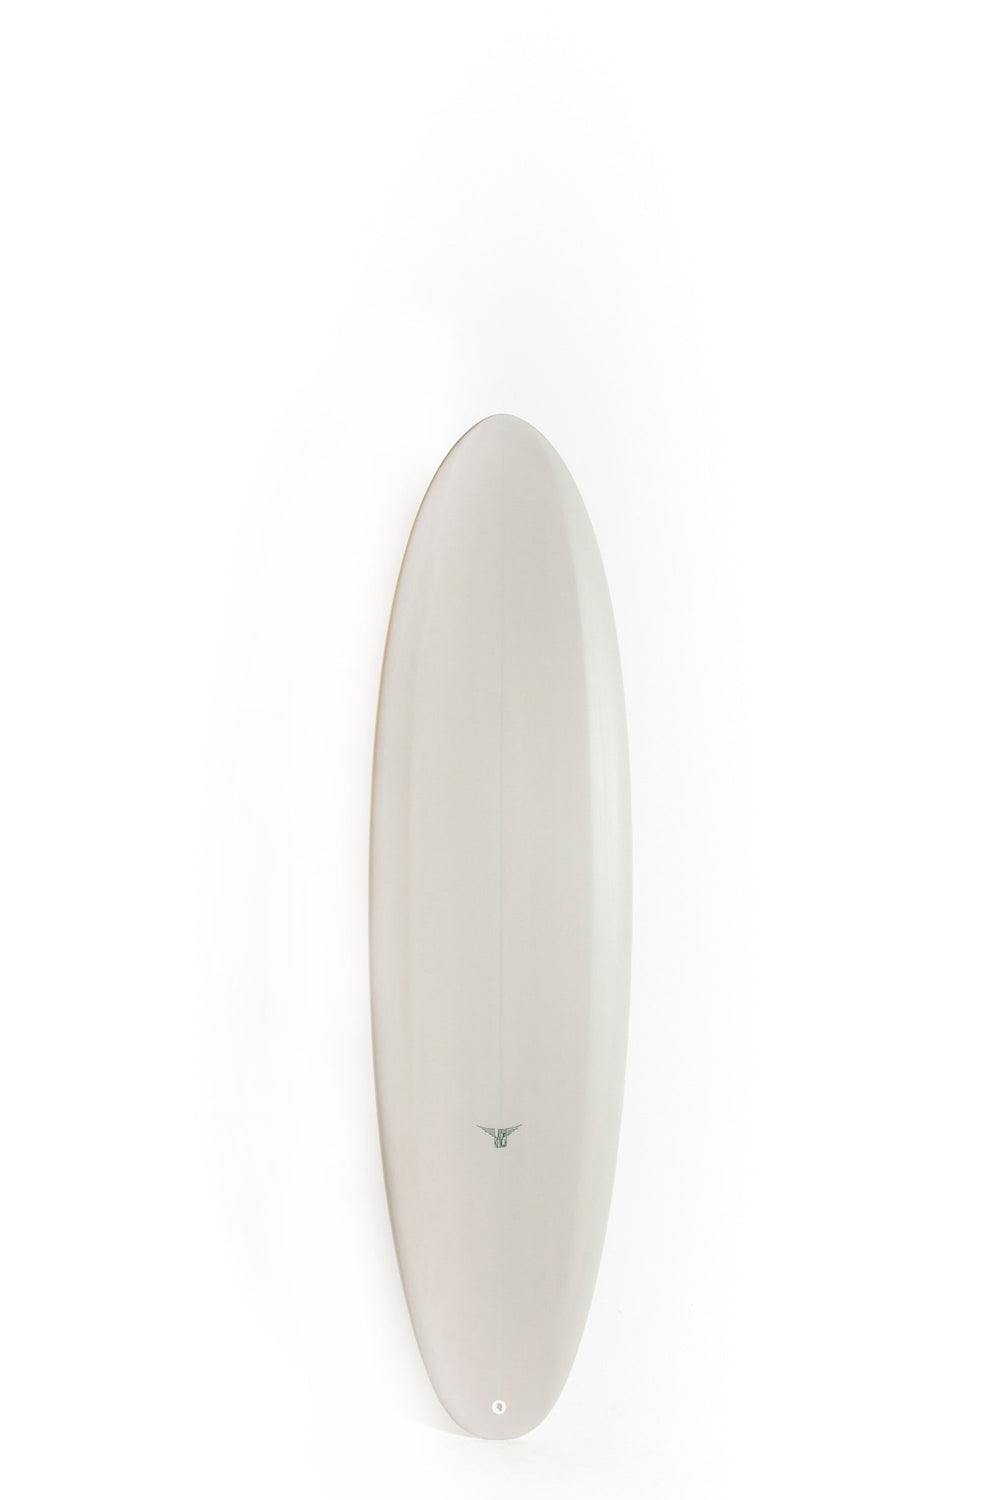 Pukas Surf Shop - Joshua Keogh Surfboard - LIBERATOR TWIN by Joshua Keogh - 6'8